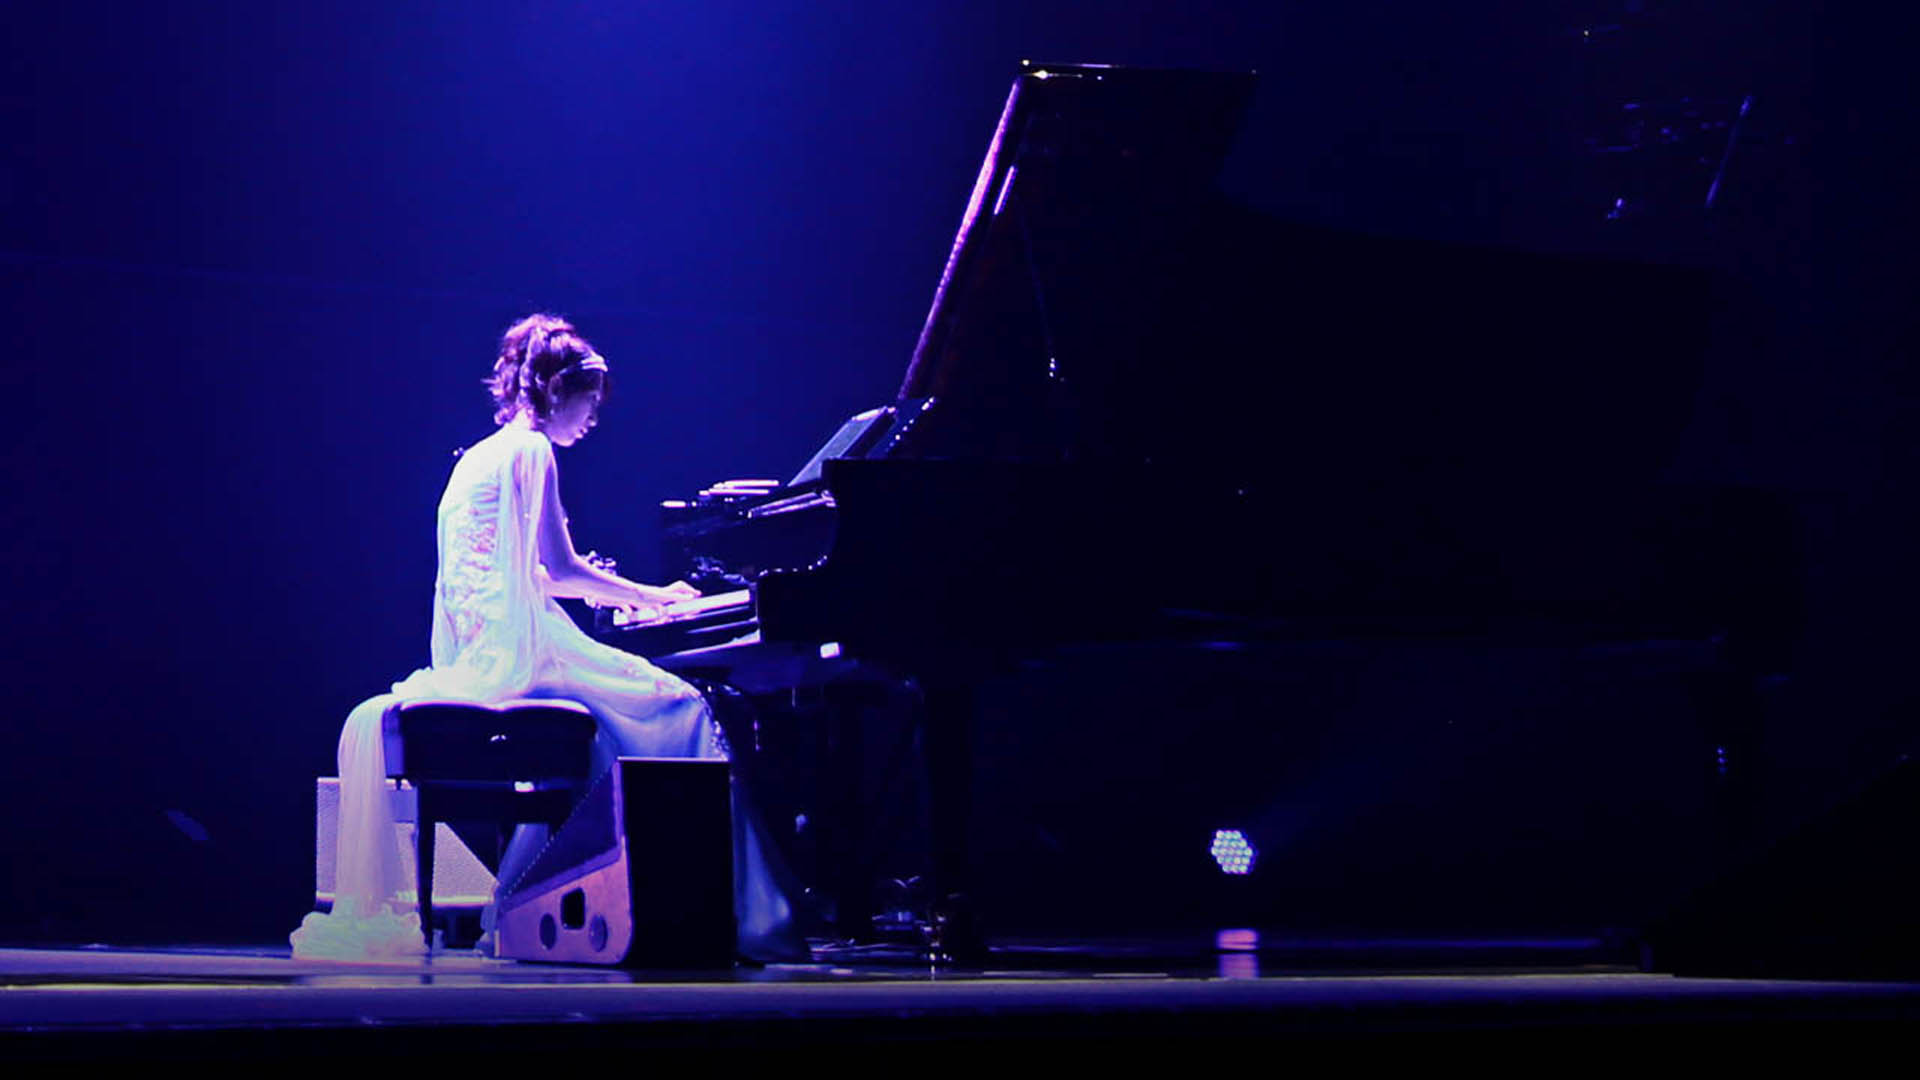 Keiko playing the piano.